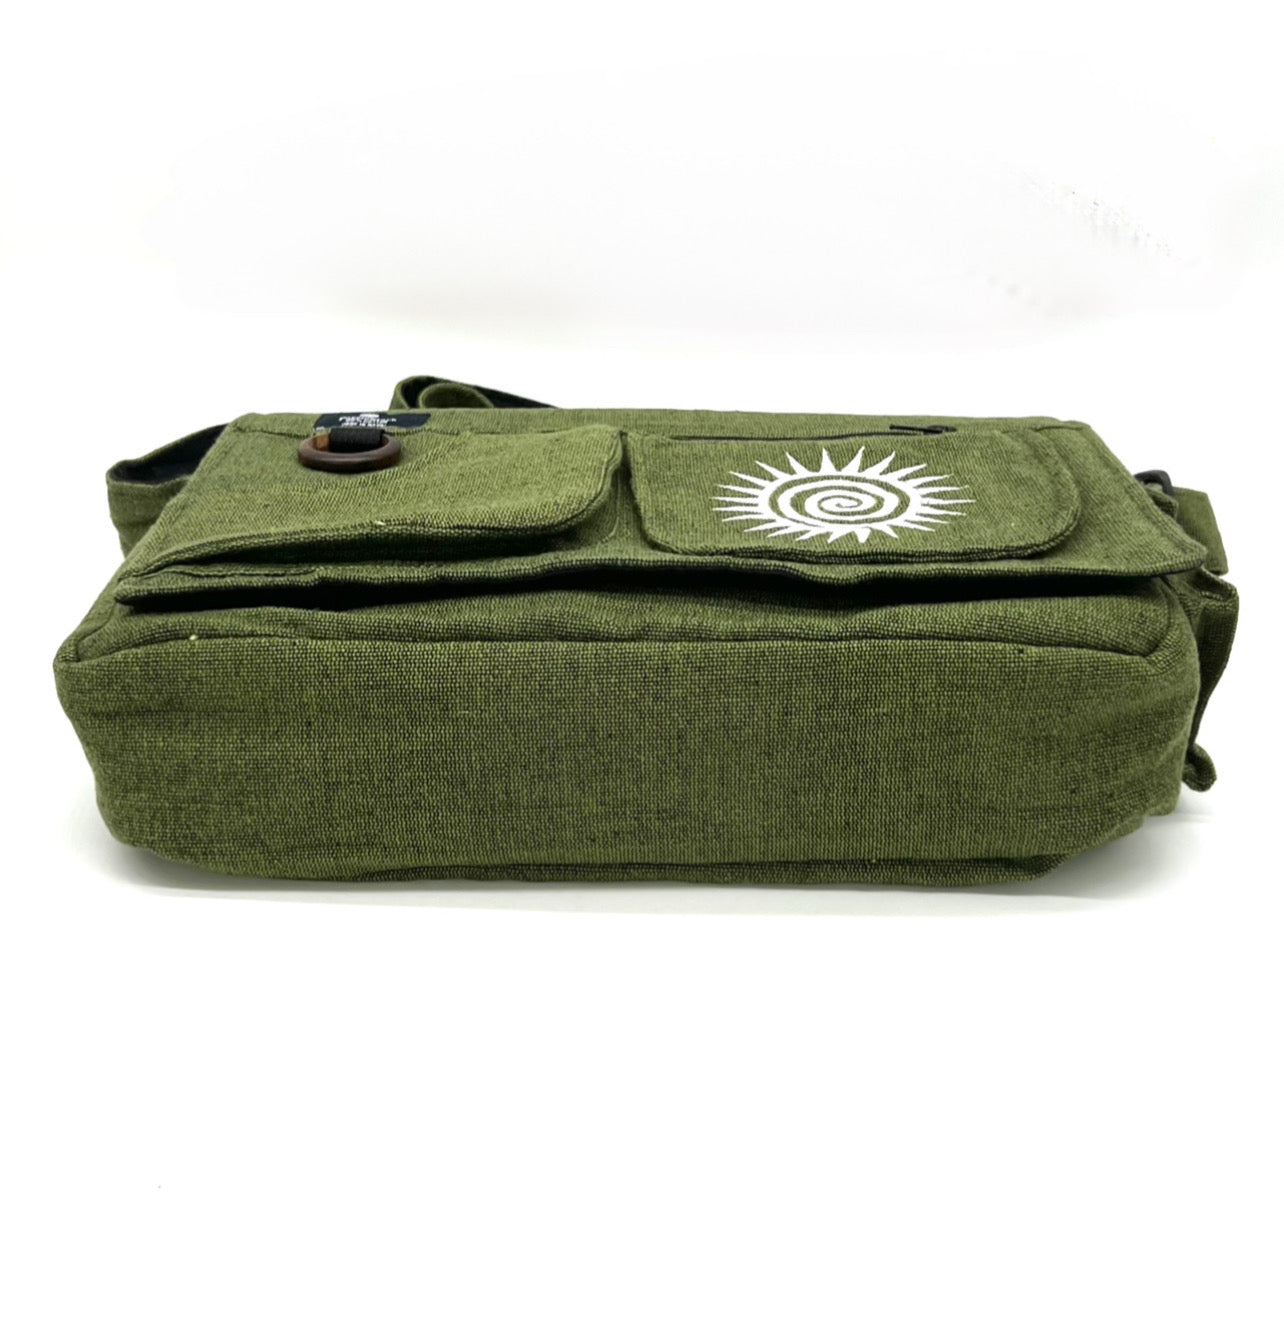 Koshi Green Embroidered Laptop Messenger Bag